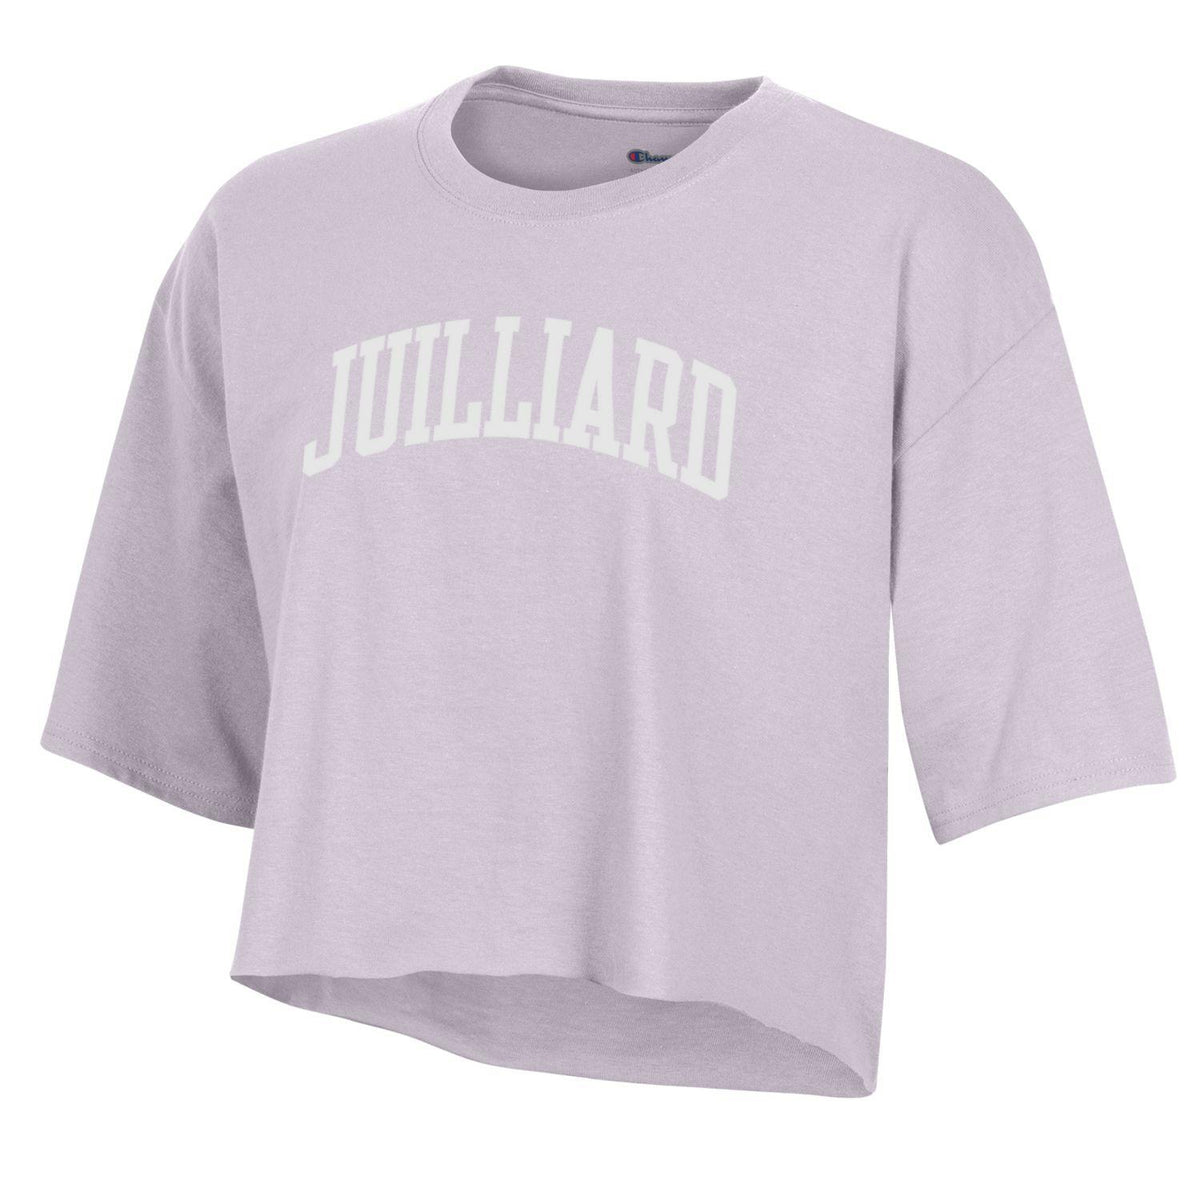 T-Shirt: Champion Crop top with Juilliard Collegiate